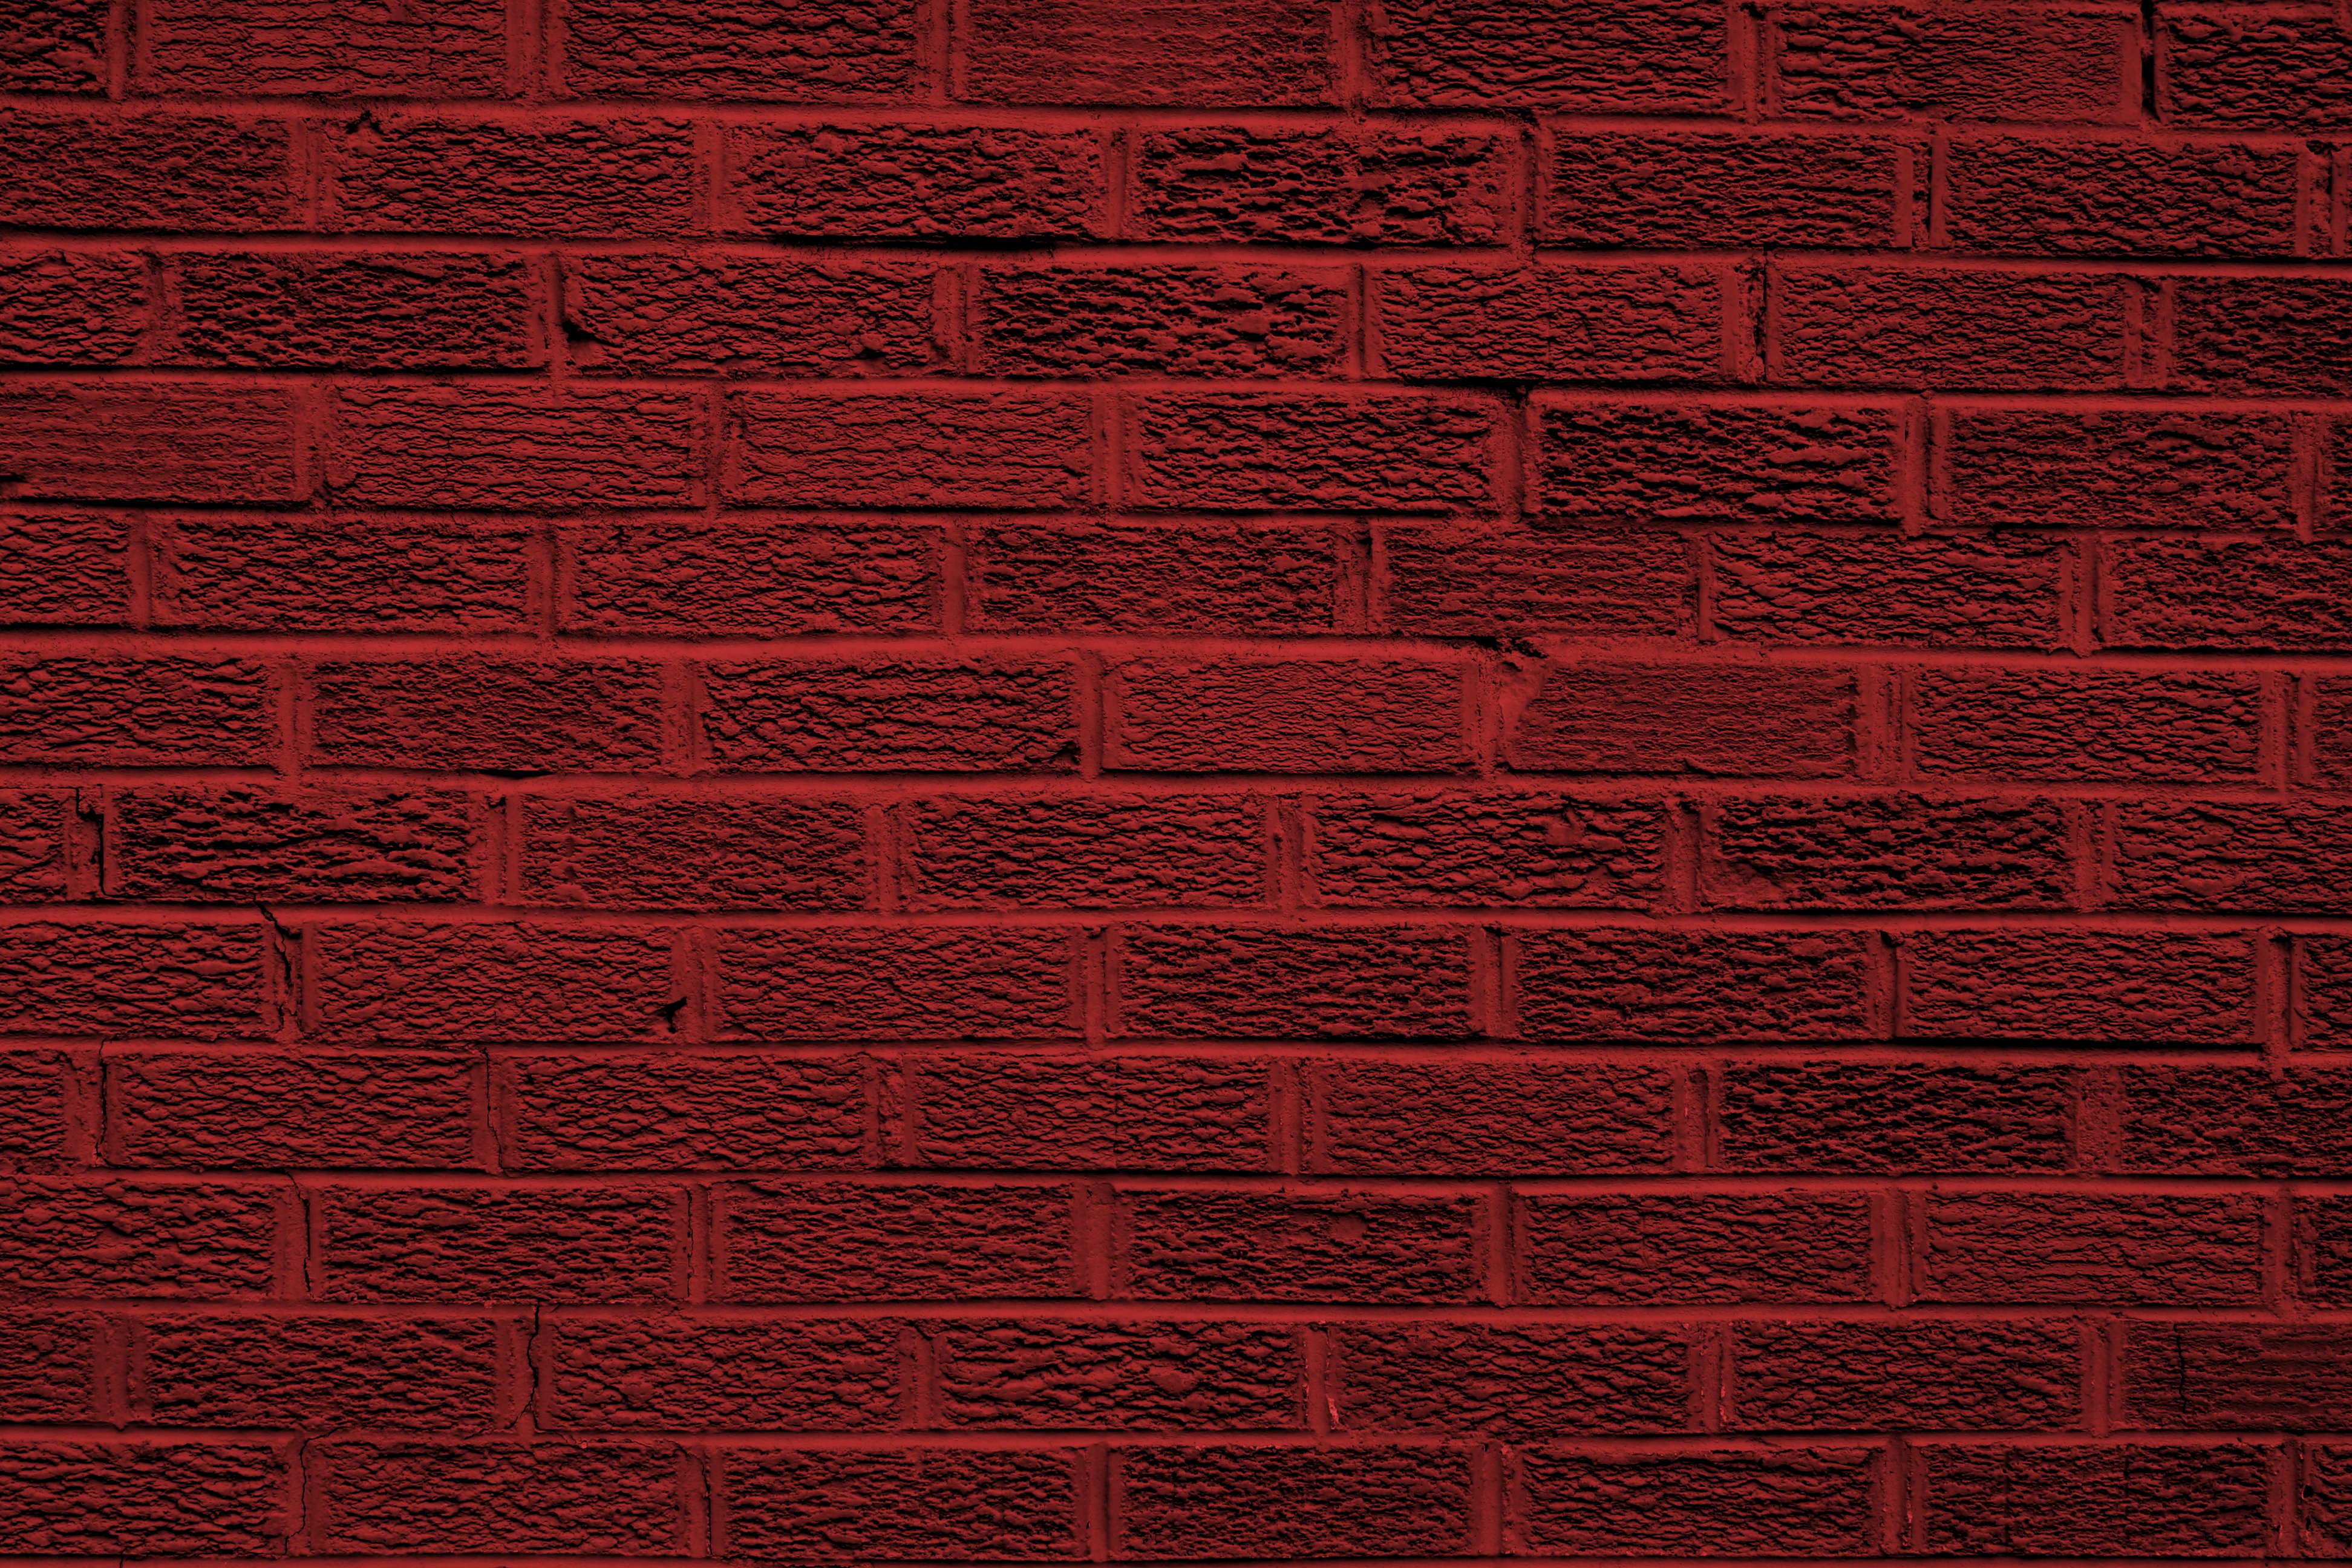 Free download red brick desktop wallpaper [3888x2592] for your Desktop, Mobile & Tablet. Explore Red Brick Wallpaper. Brick Wallpaper Home Depot, Wallpaper That Looks Like Brick